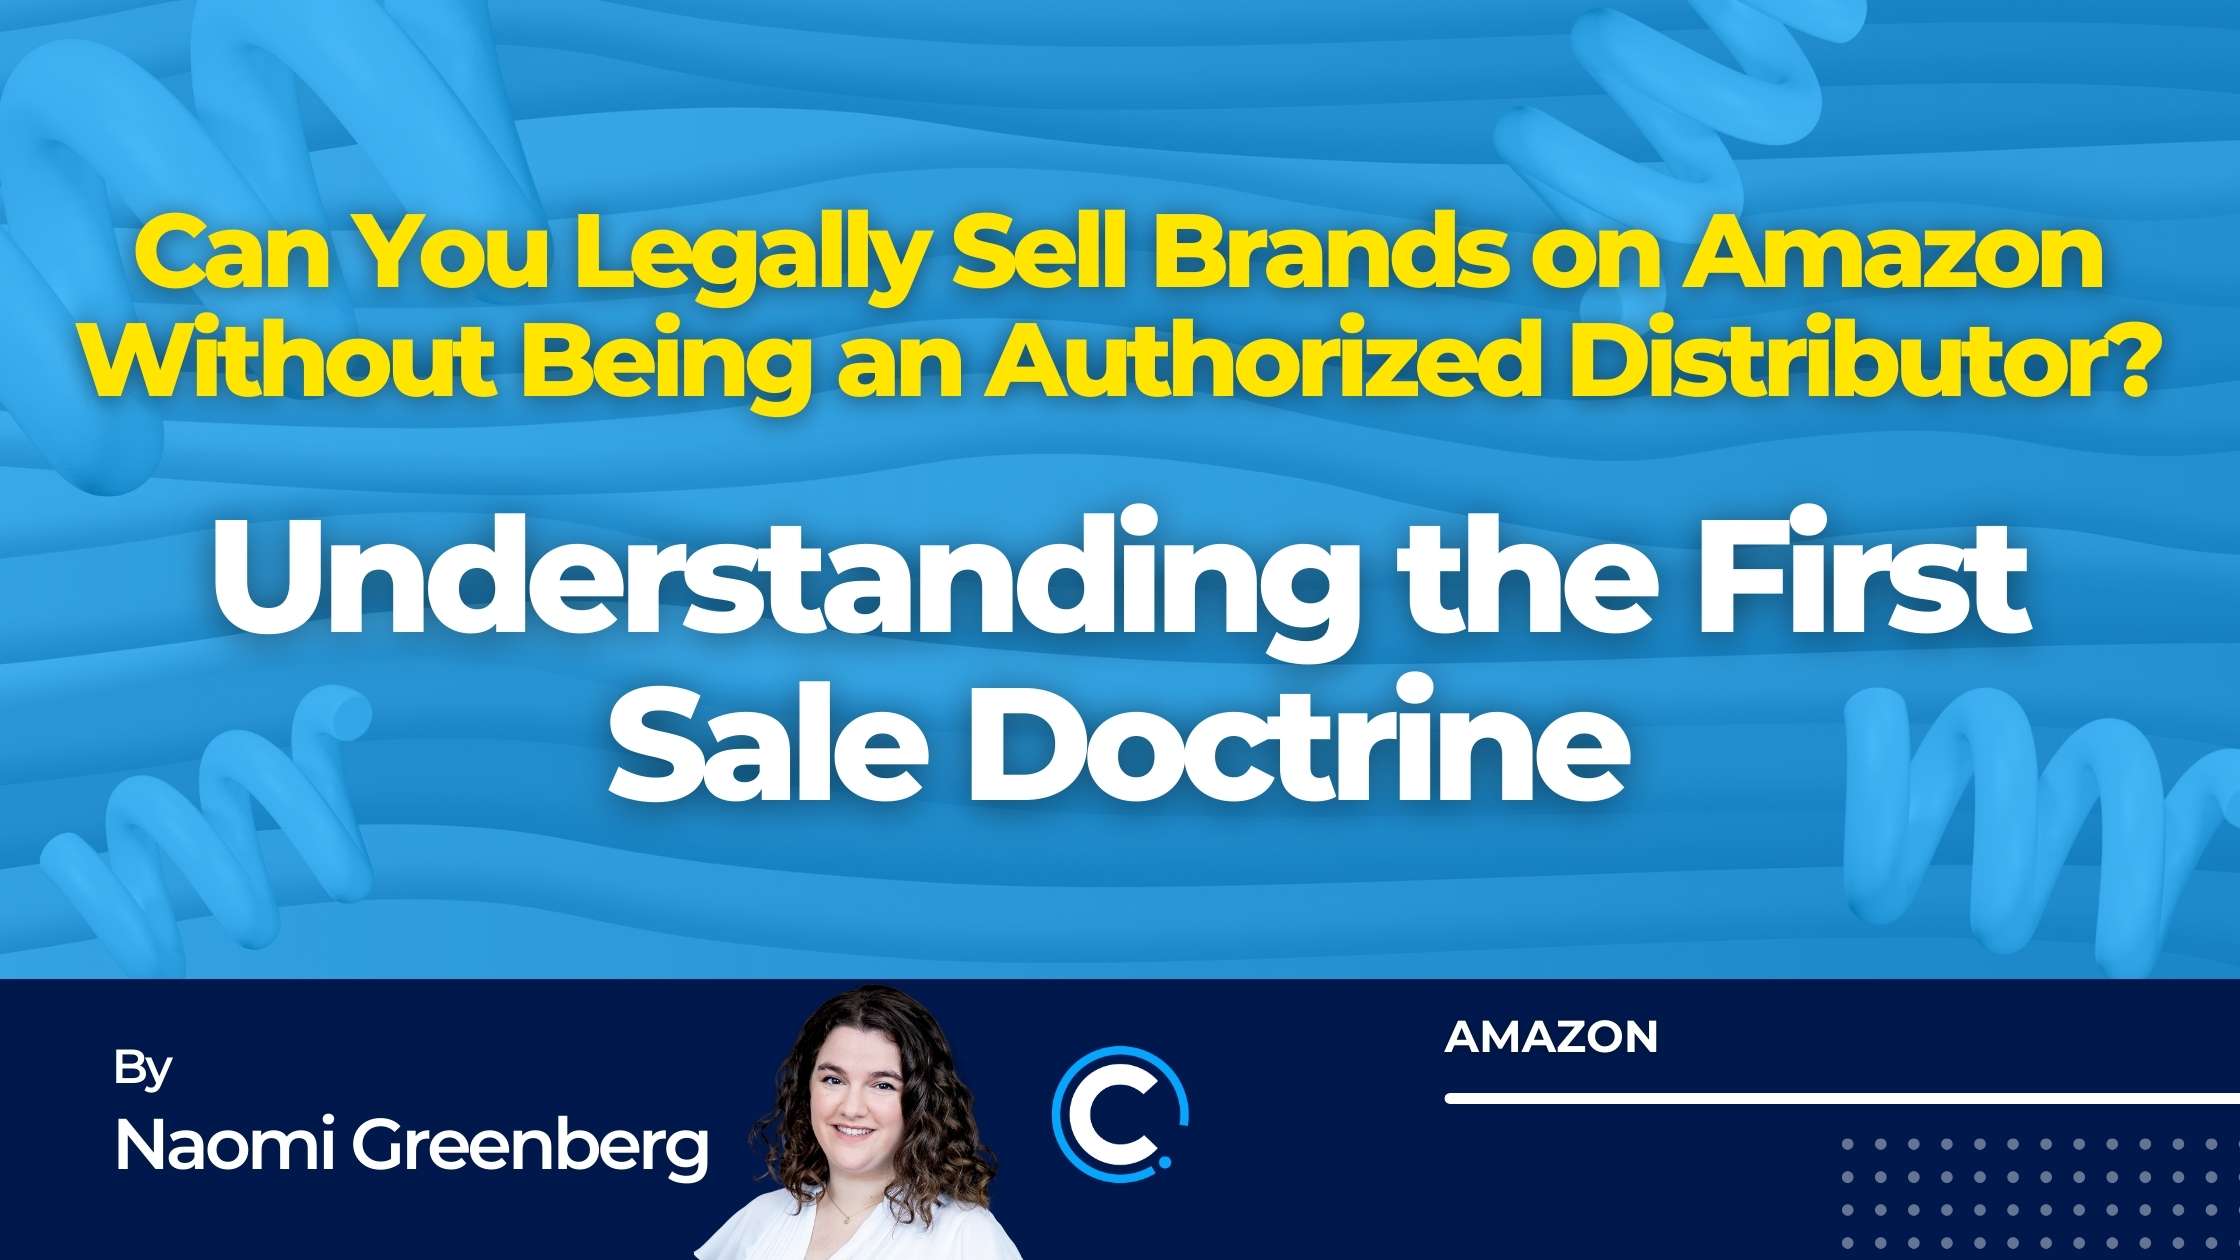 First sale doctrine